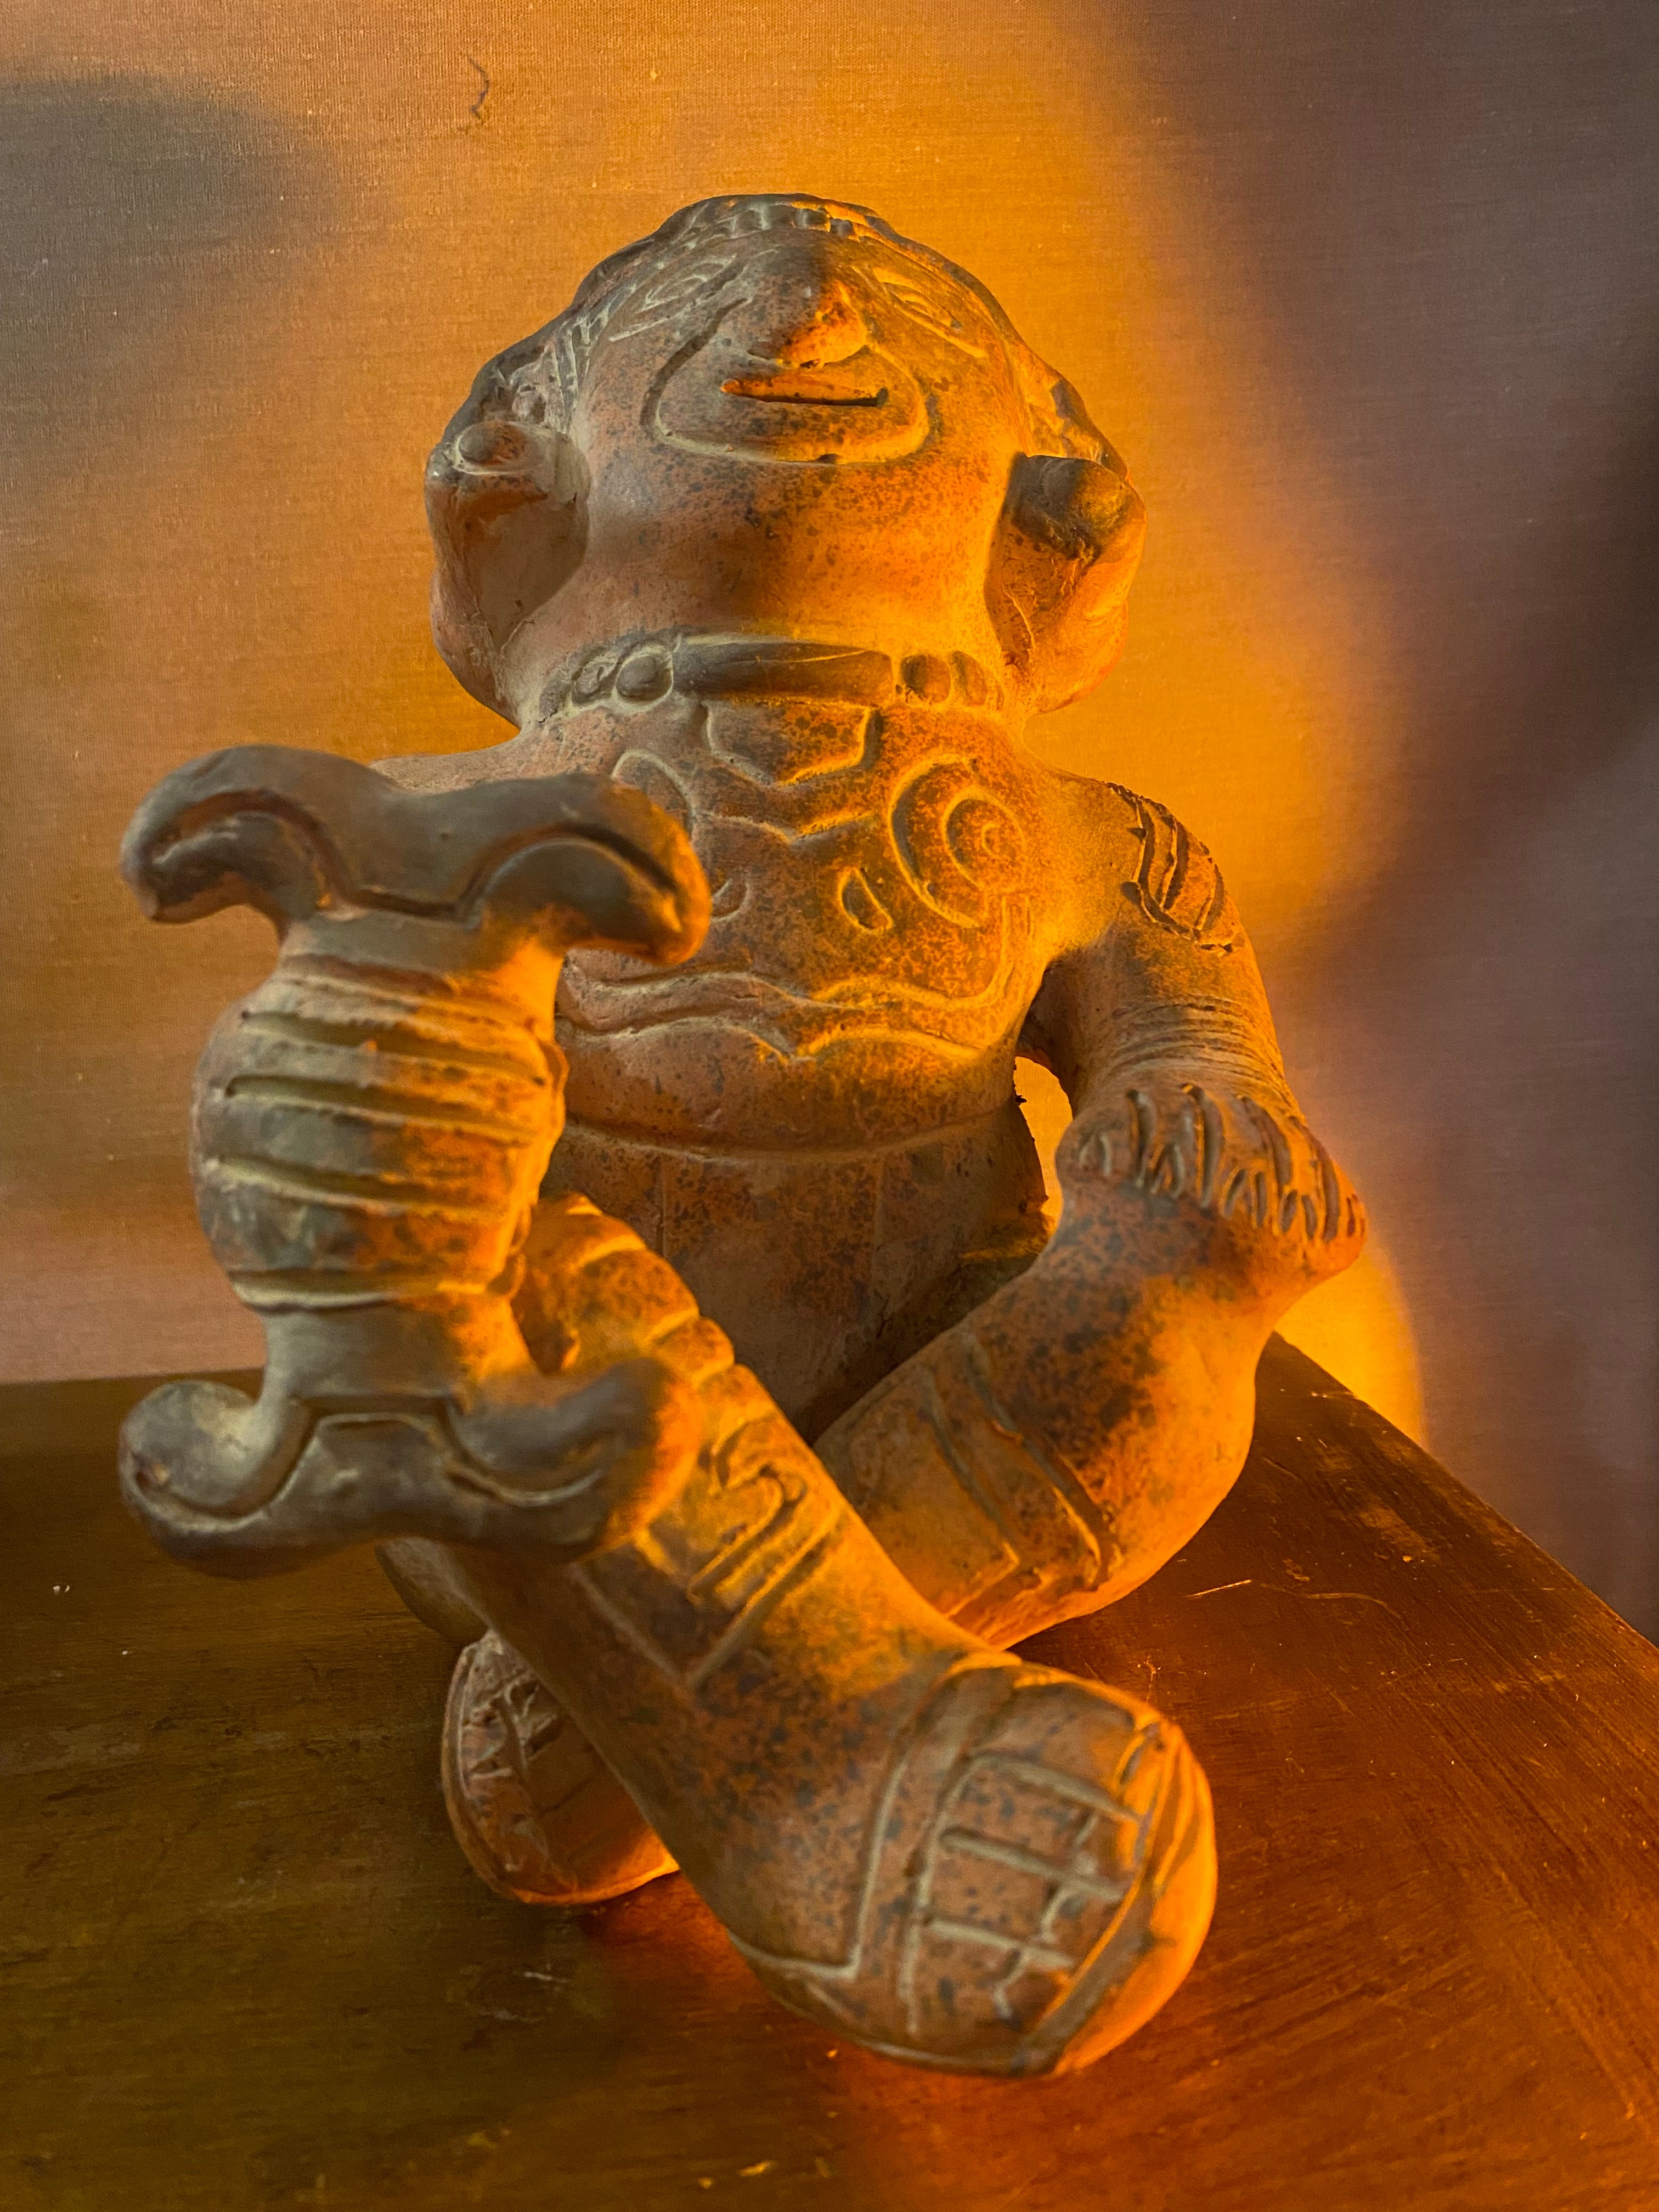 Vintage Small Cross-Legged Pre-Columbian Style Terra Cotta Statue of Mesoamerican God Xochipilli or "Prince of Flowers"